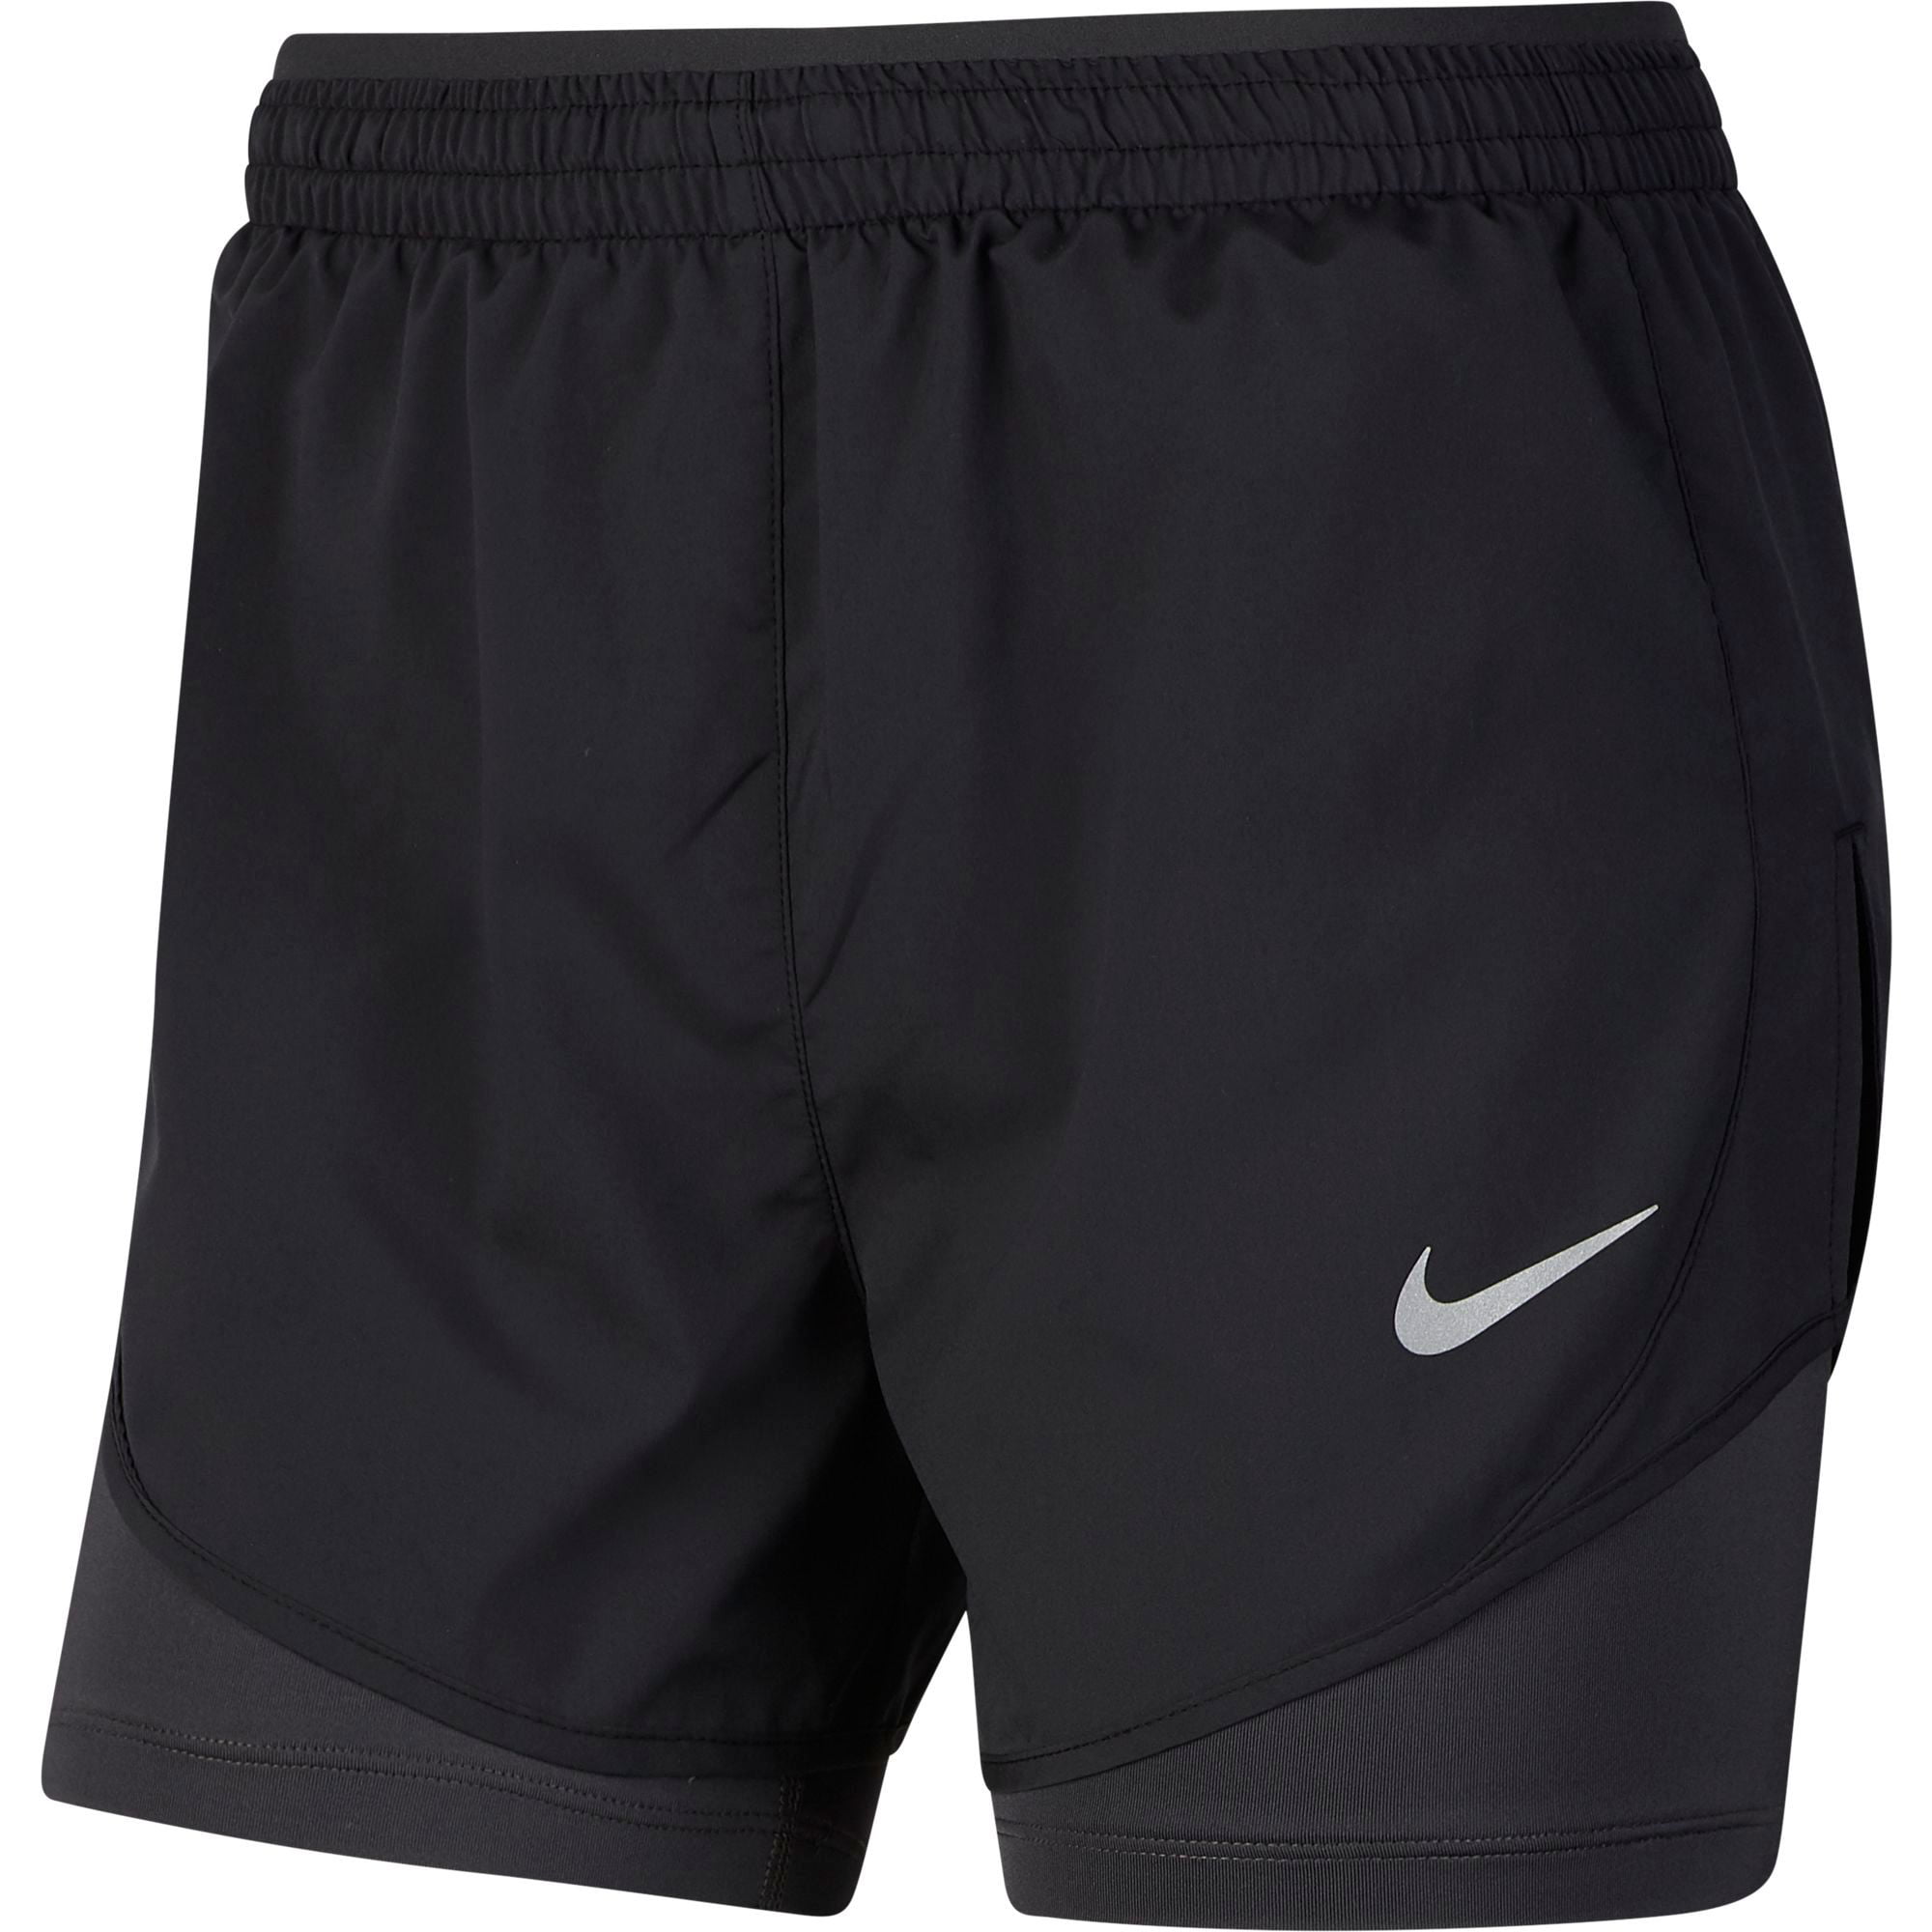 Nike - Nike Women's Tempo Lux 2-in-1 Running Shorts - Walmart.com ...